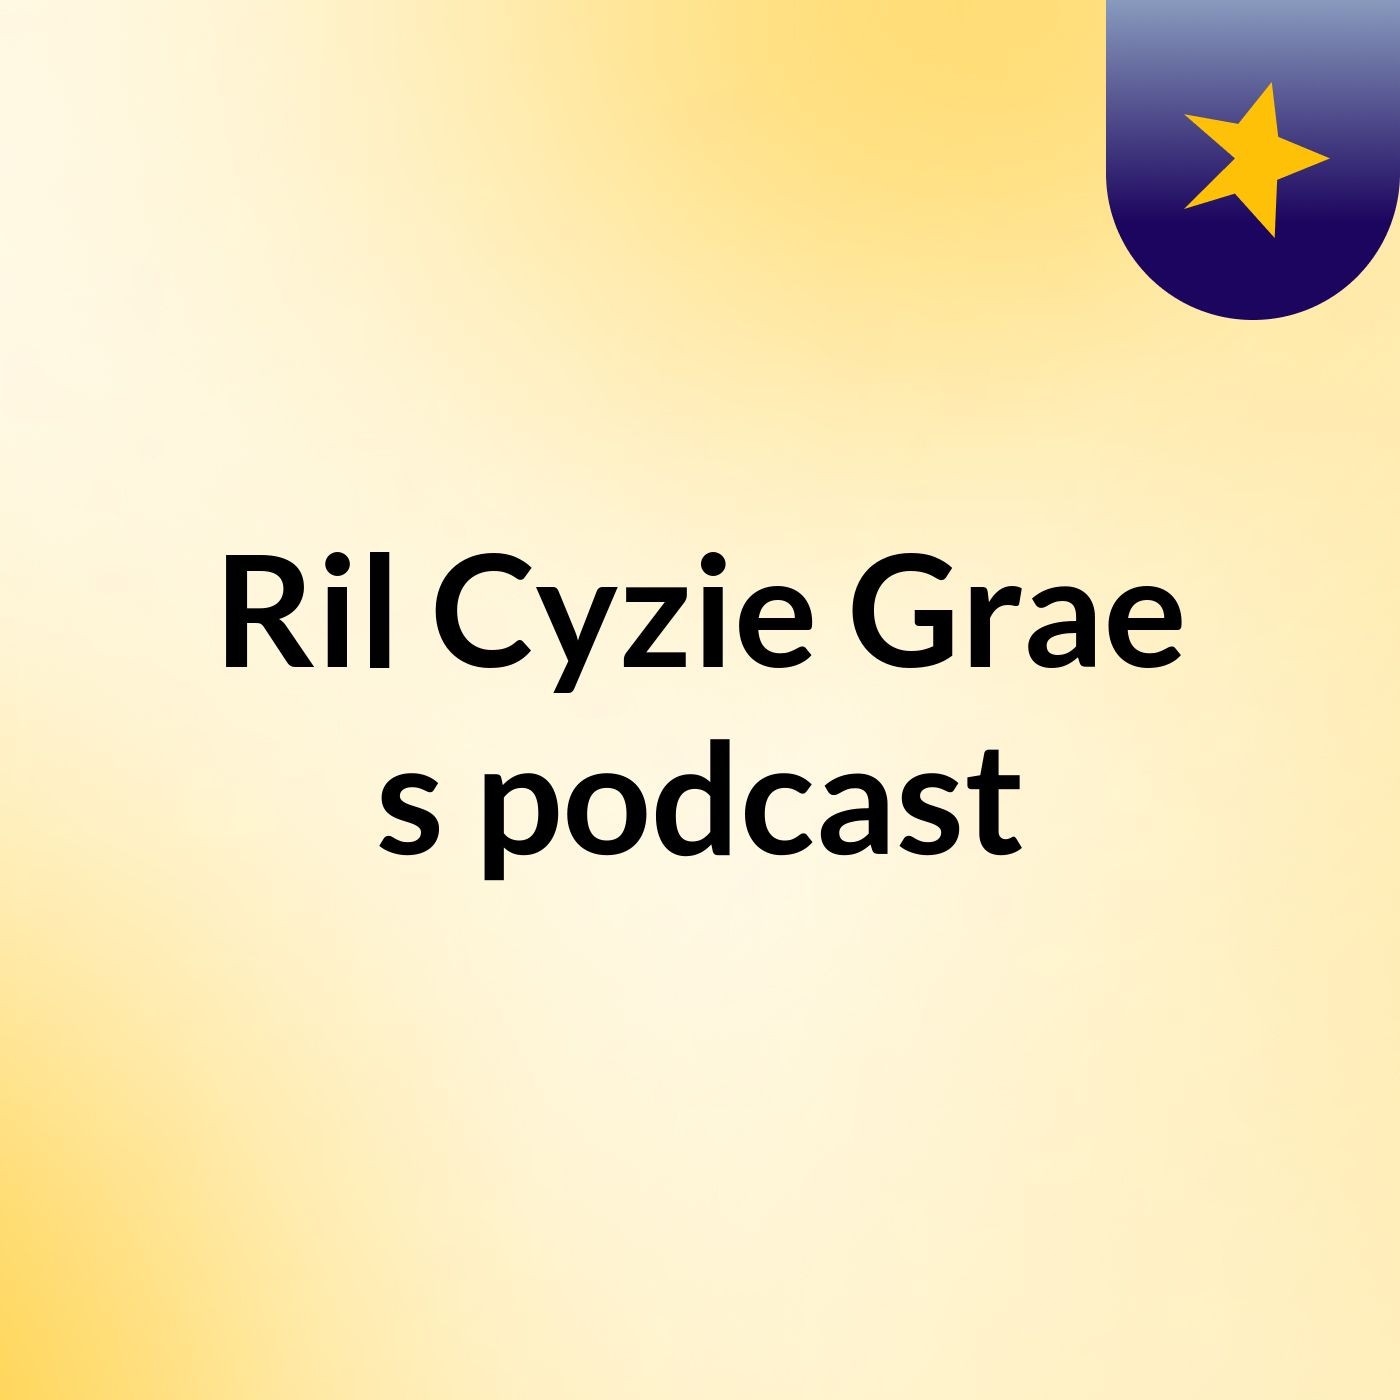 Episode 2 - Ril Cyzie Grae's podcast